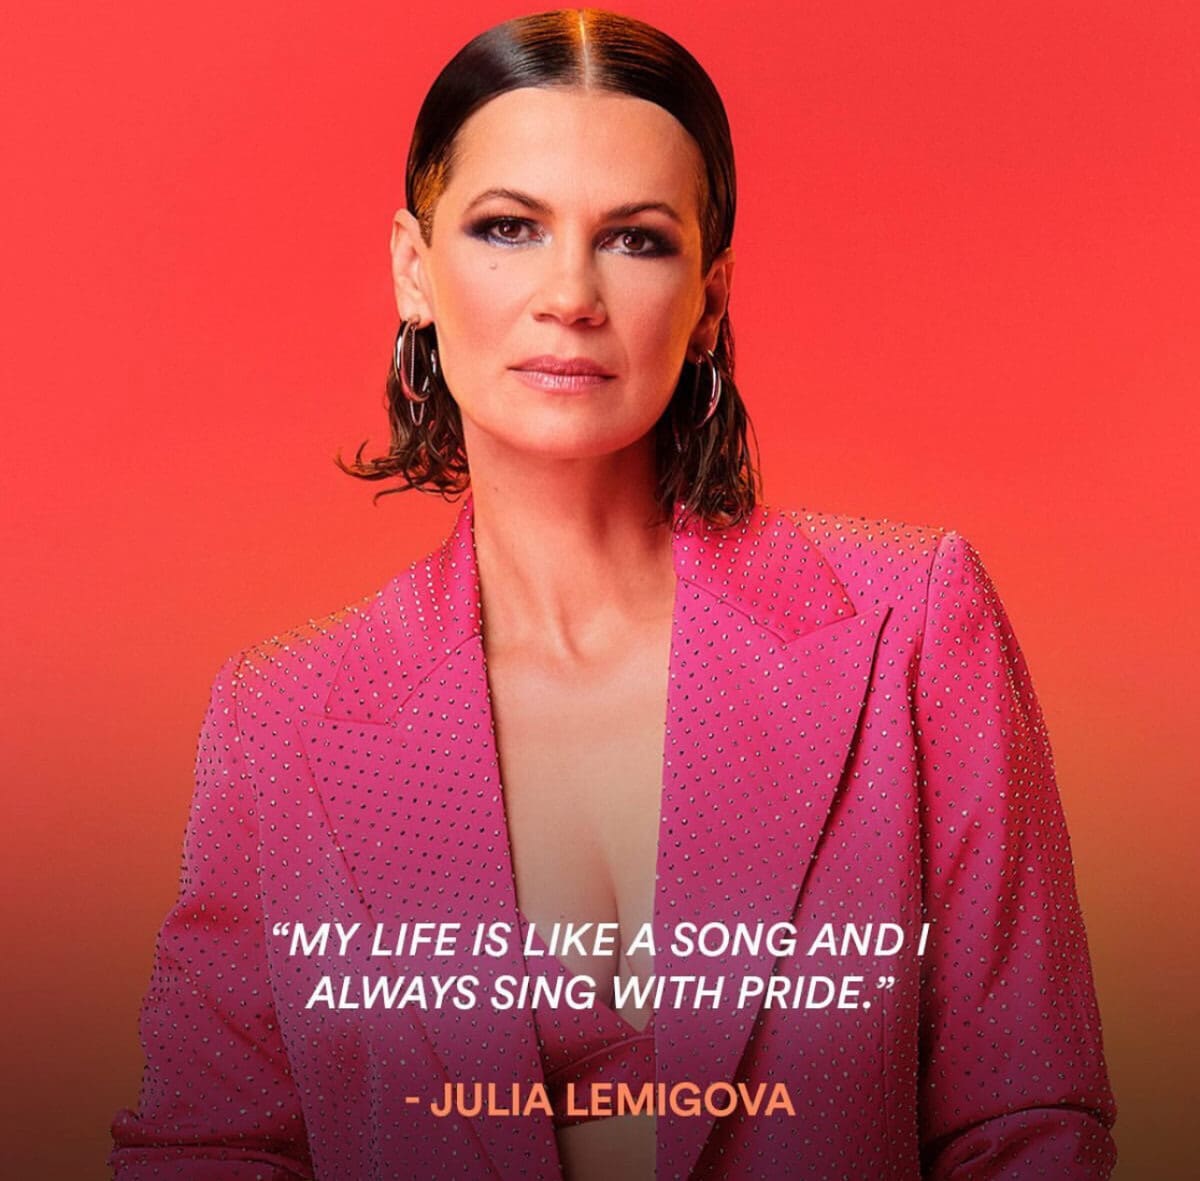 Julia is living life loud and proud this season.